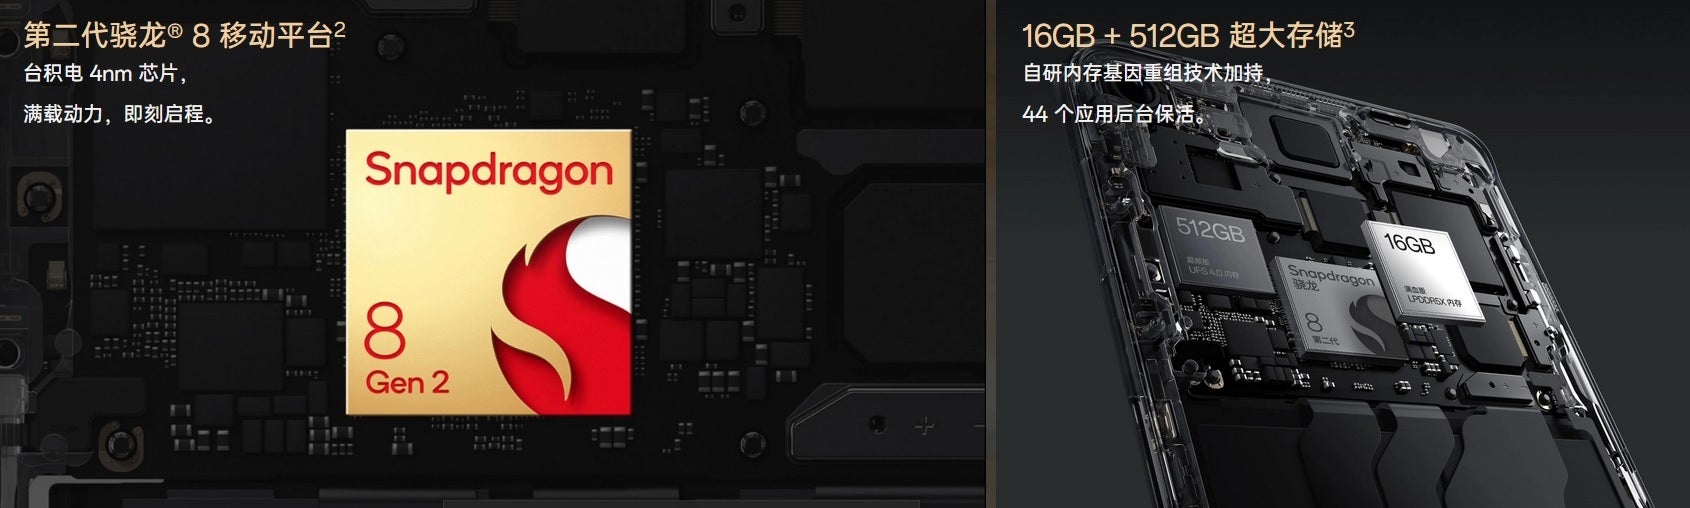 OnePlus 11 Jupiter Rock Limited Edition con tecnología Snapdragon 8 Gen 2 SoC: OnePlus 11 Jupiter Rock Limited Edition ya es oficial